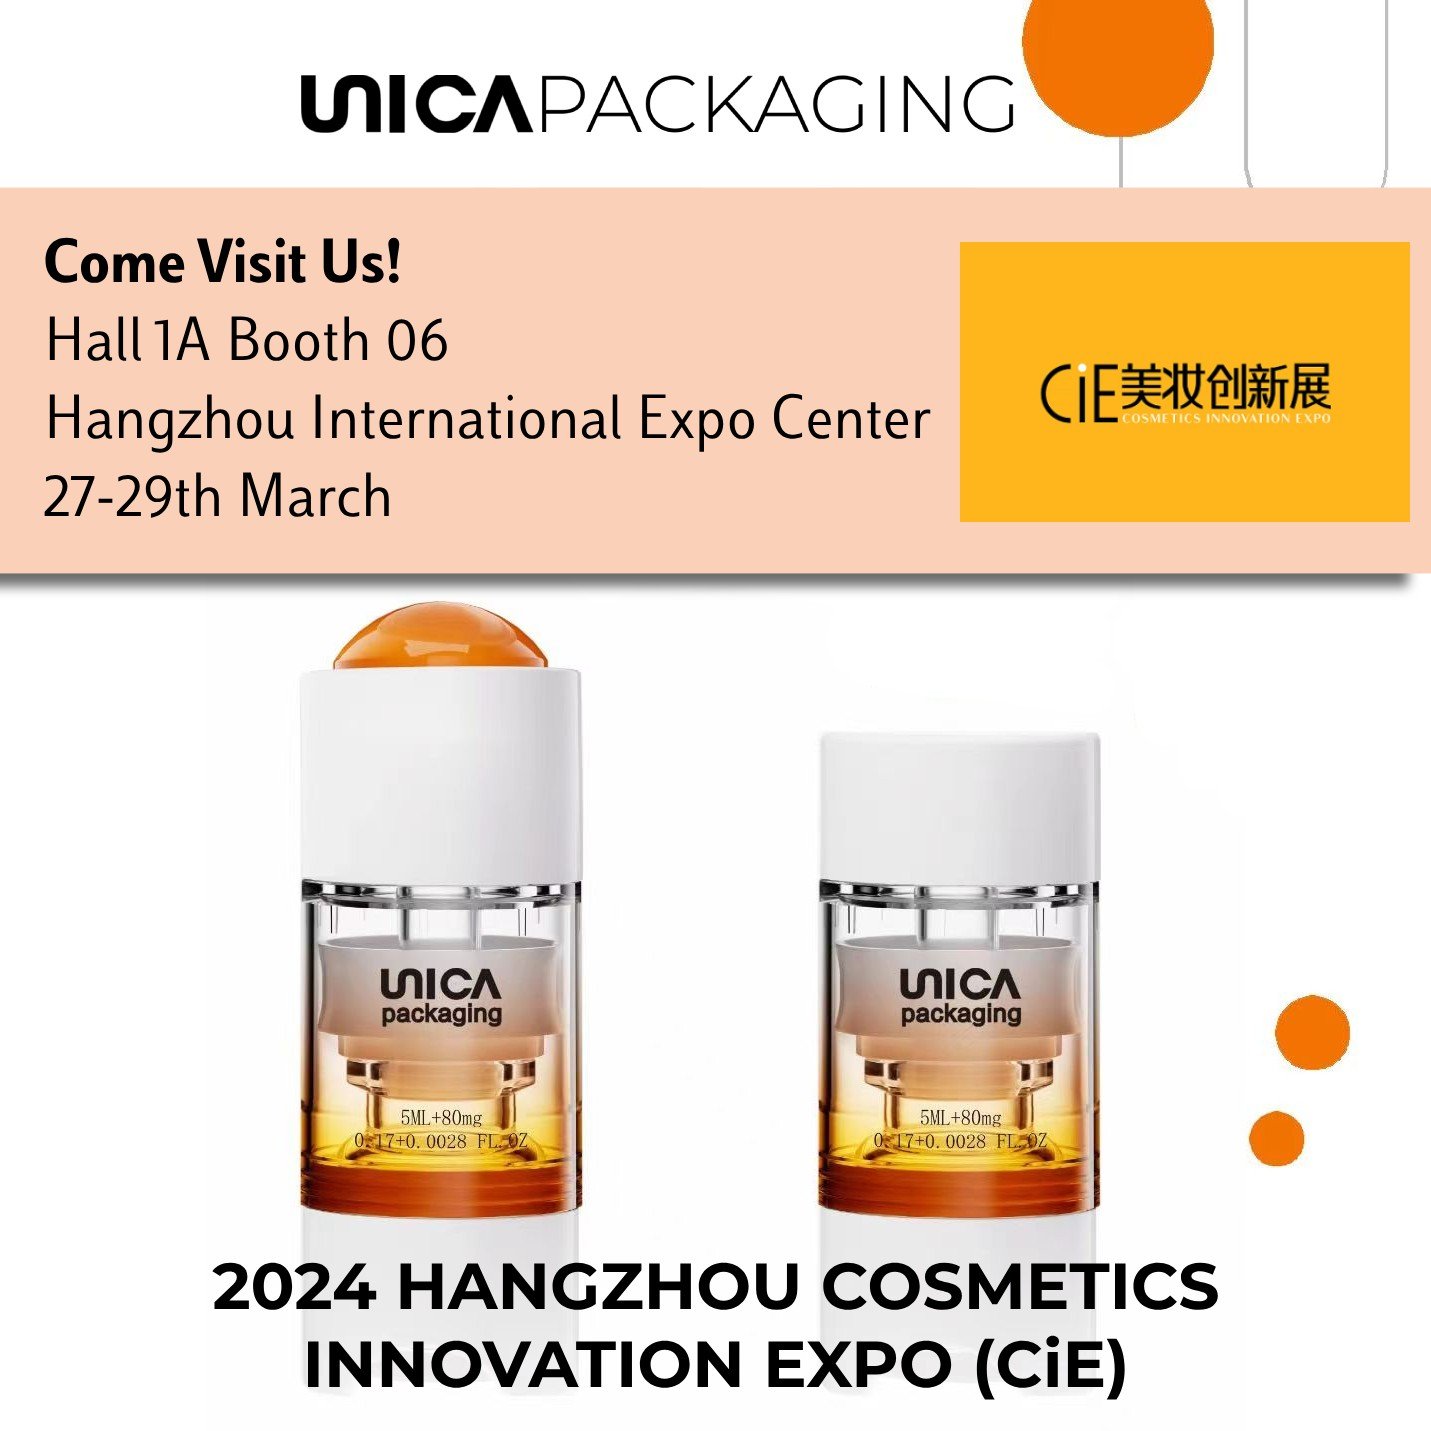 Unica Packaging 备战 2024 年杭州化妆品创新博览会 (CiE)